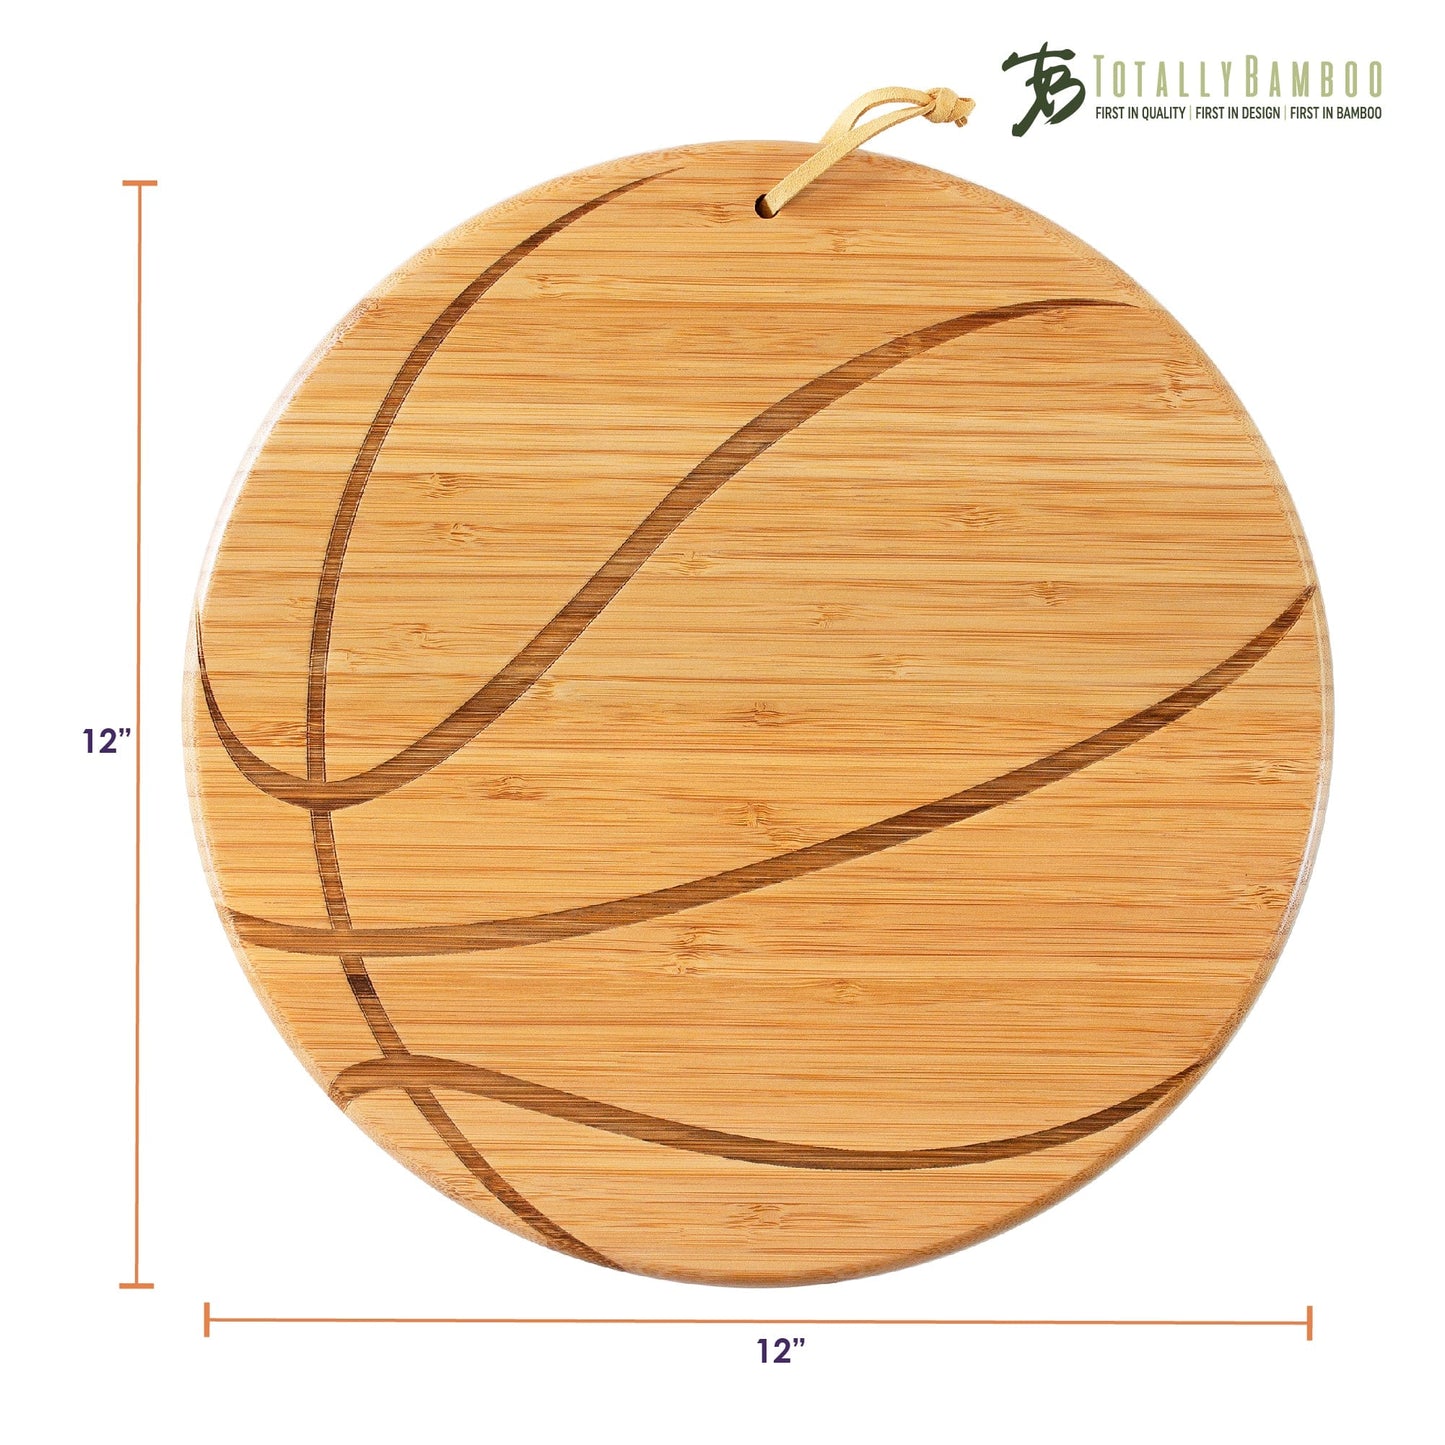 Basketball Shaped Serving & Cutting Board, 12" Diameter